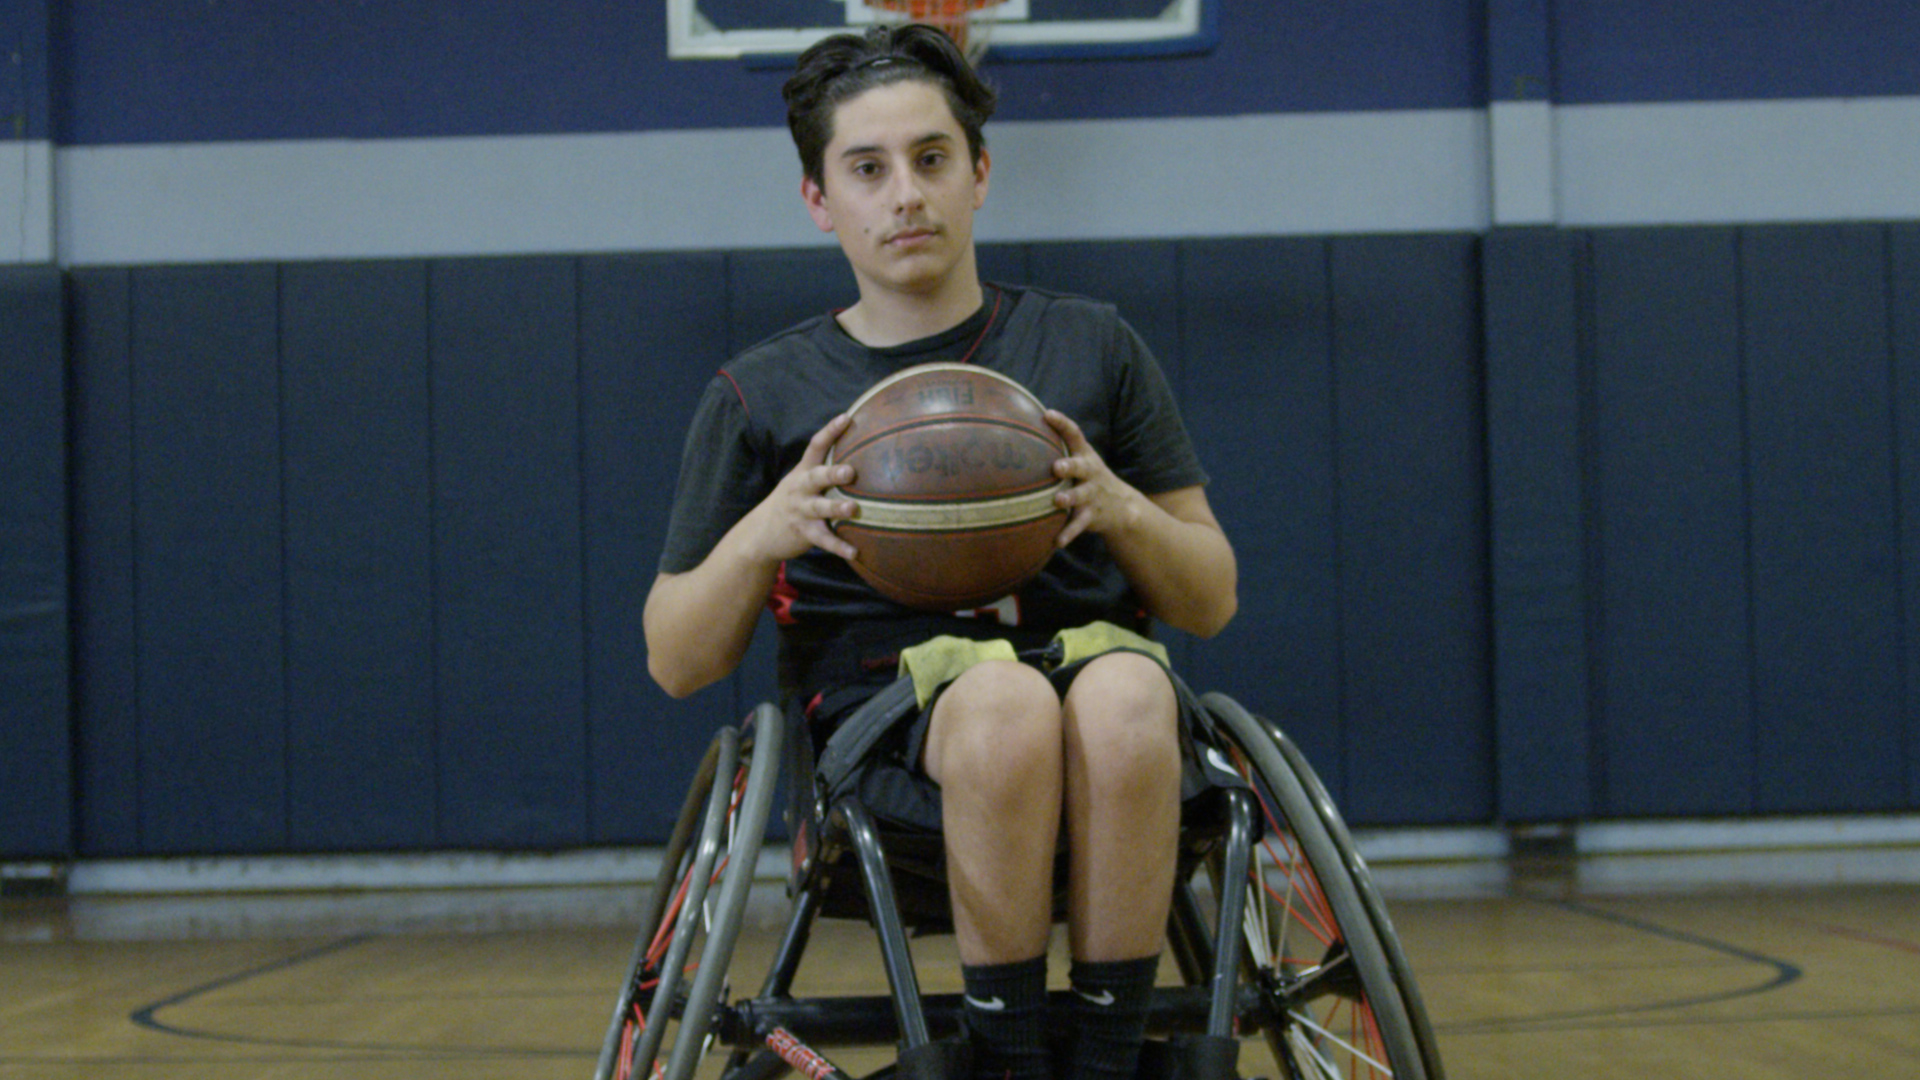 Danny playing wheelchair baseball.